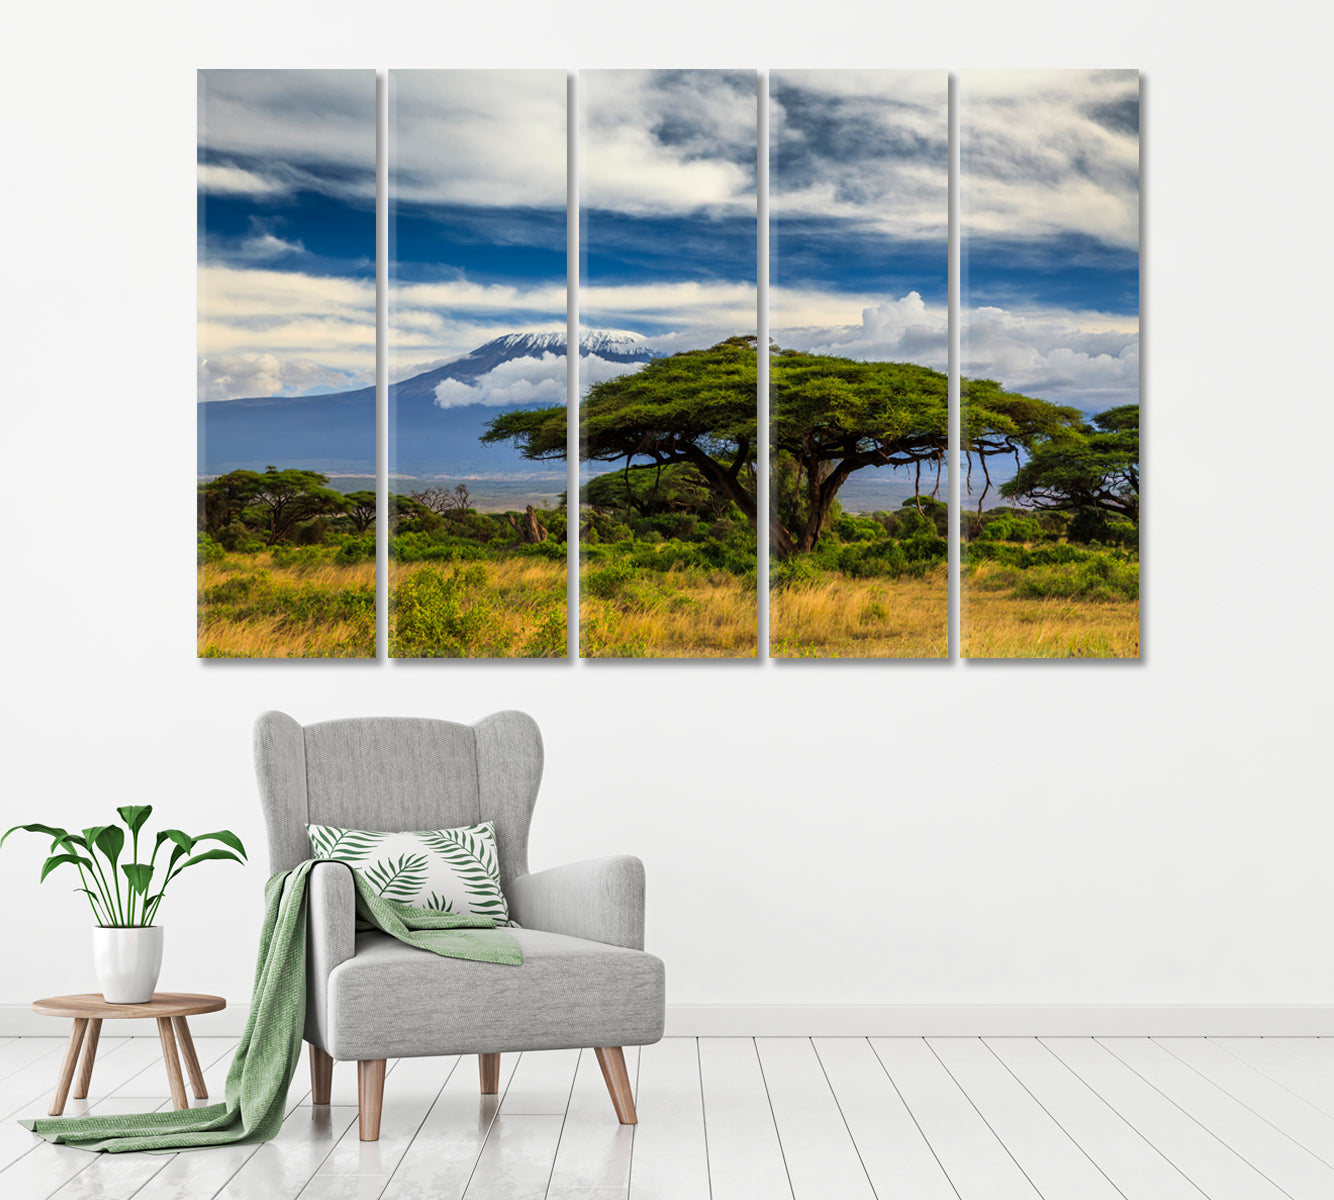 Mount Kilimanjaro Landscape Kenya Africa Canvas Print ArtLexy 5 Panels 36"x24" inches 